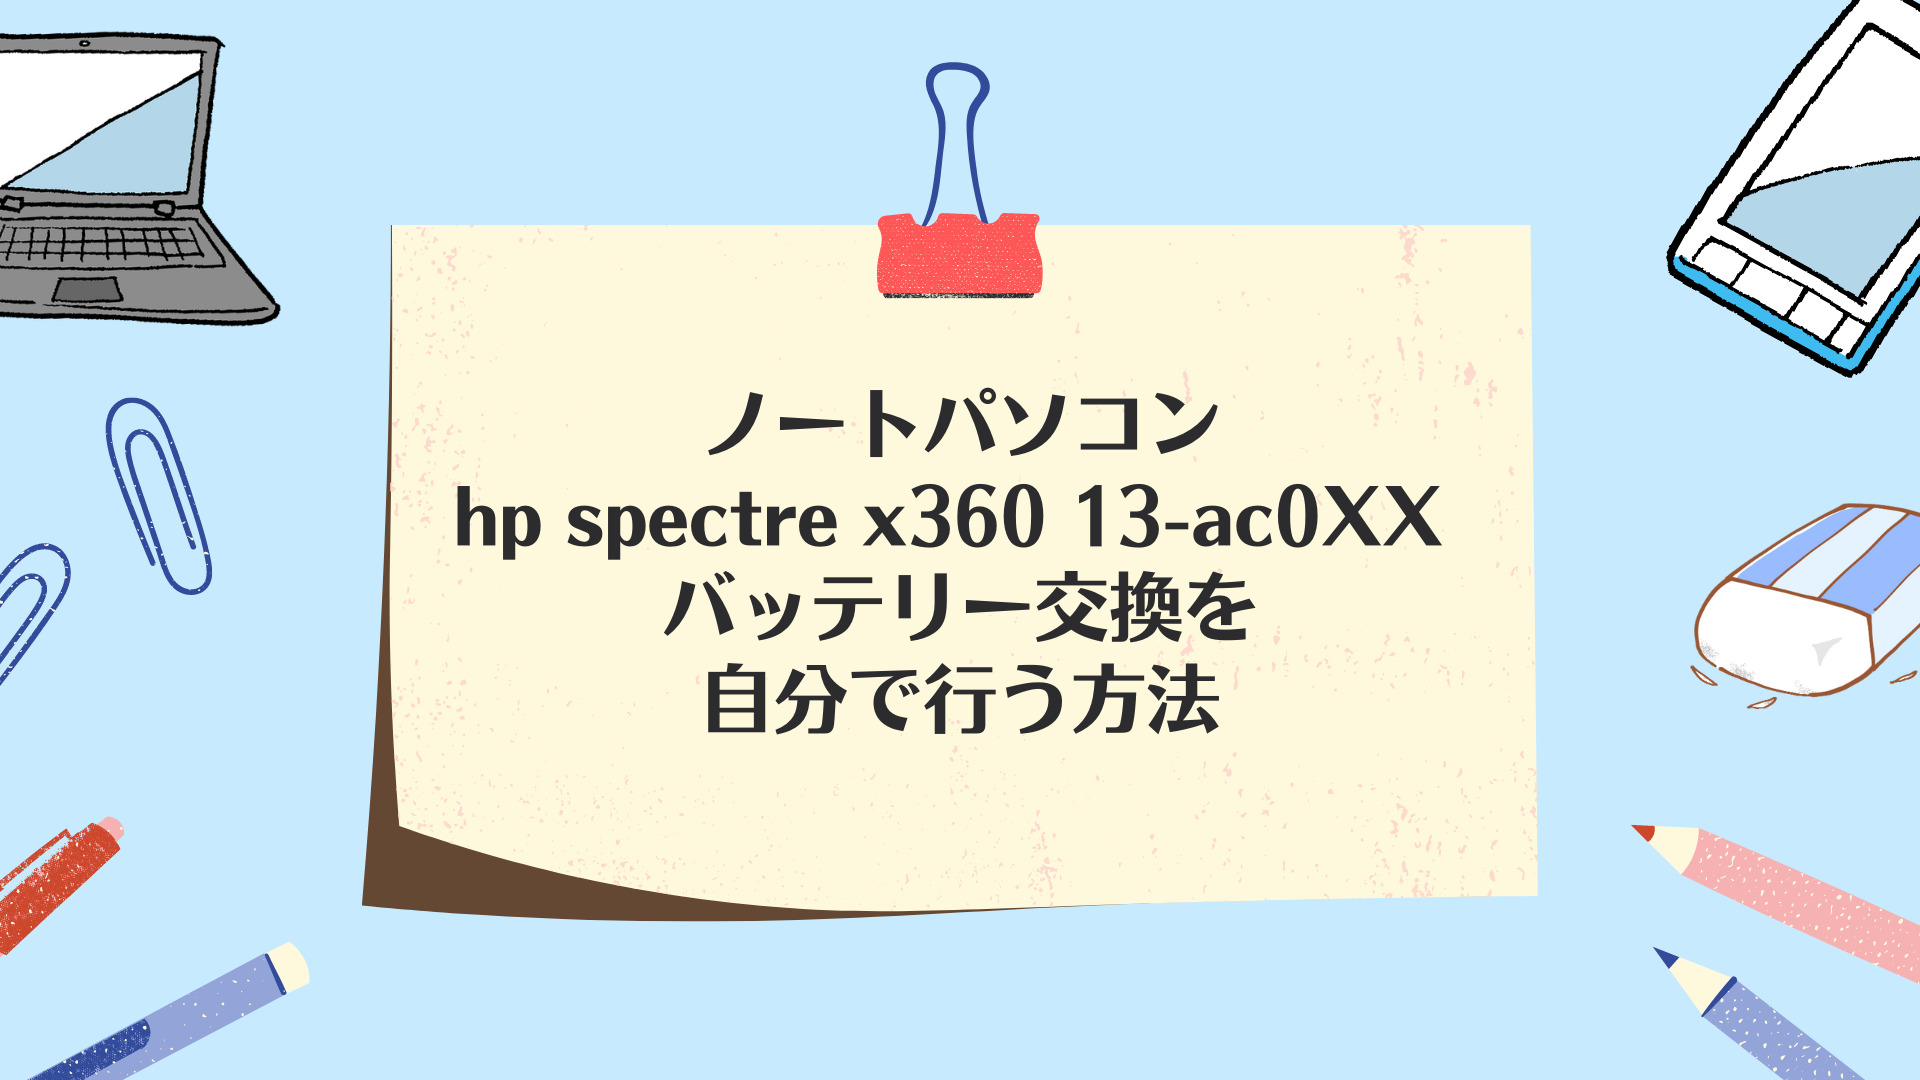 Windows ノートパソコン hp spectre x360 13-ac0xxPC/タブレット